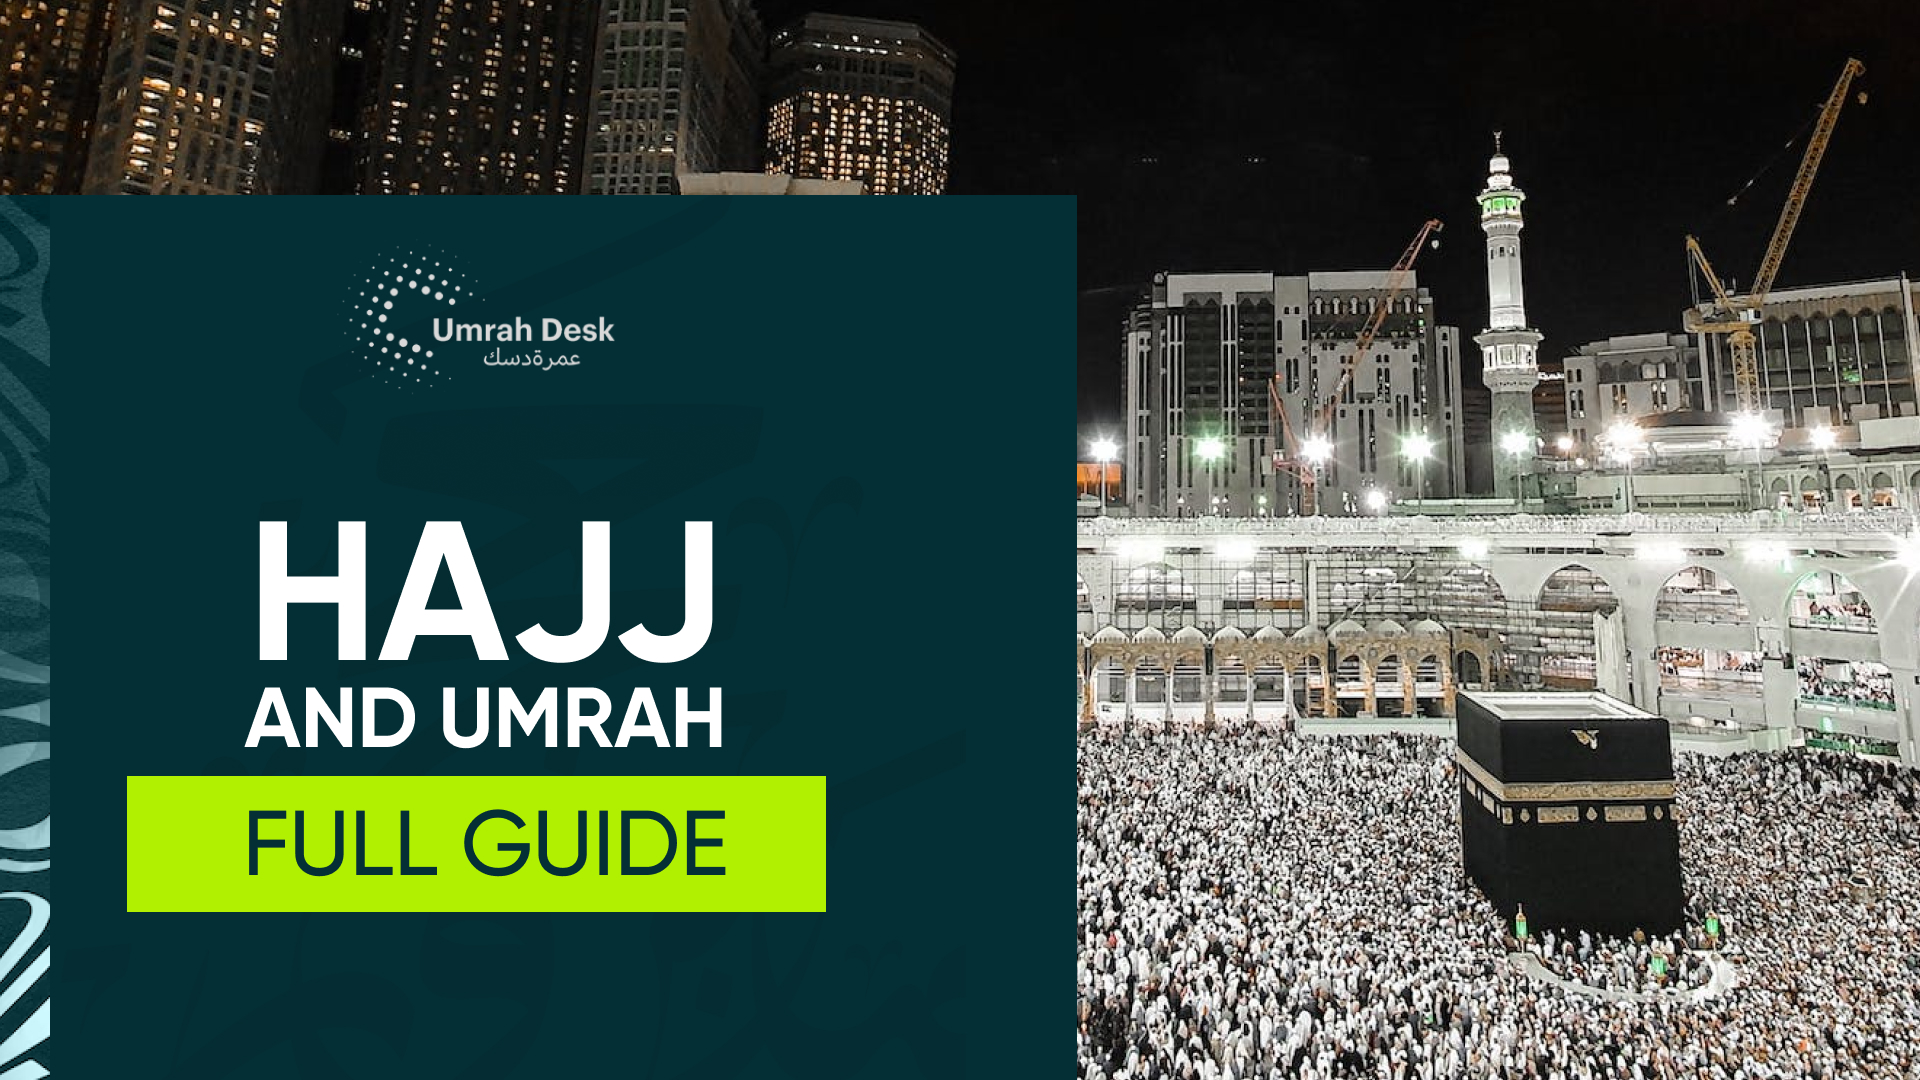 Hajj And Umrah Full Guide